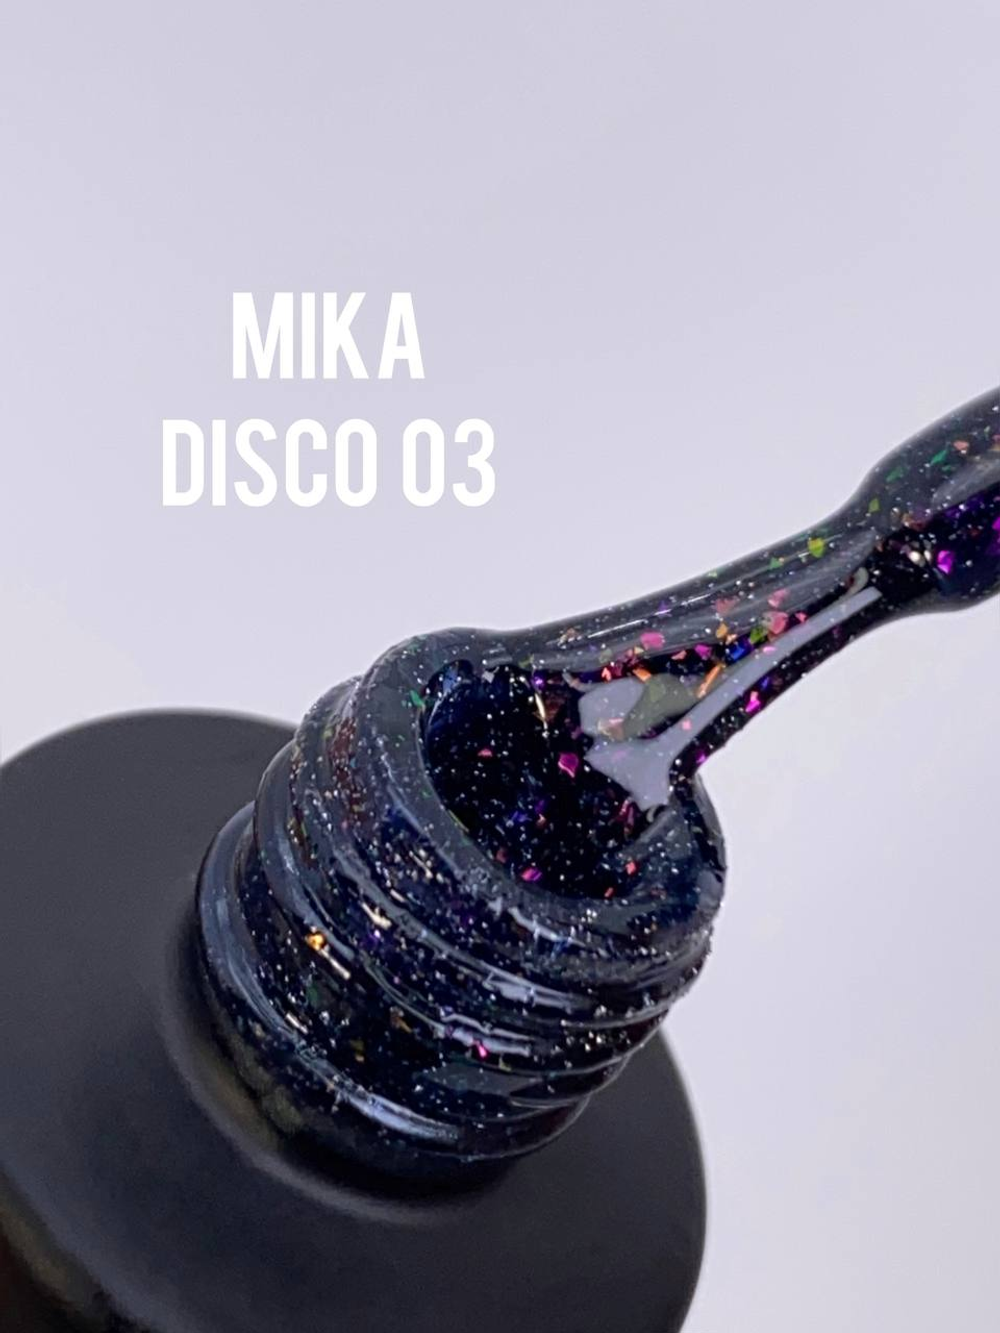 Гель-лак MIKA Disco №03